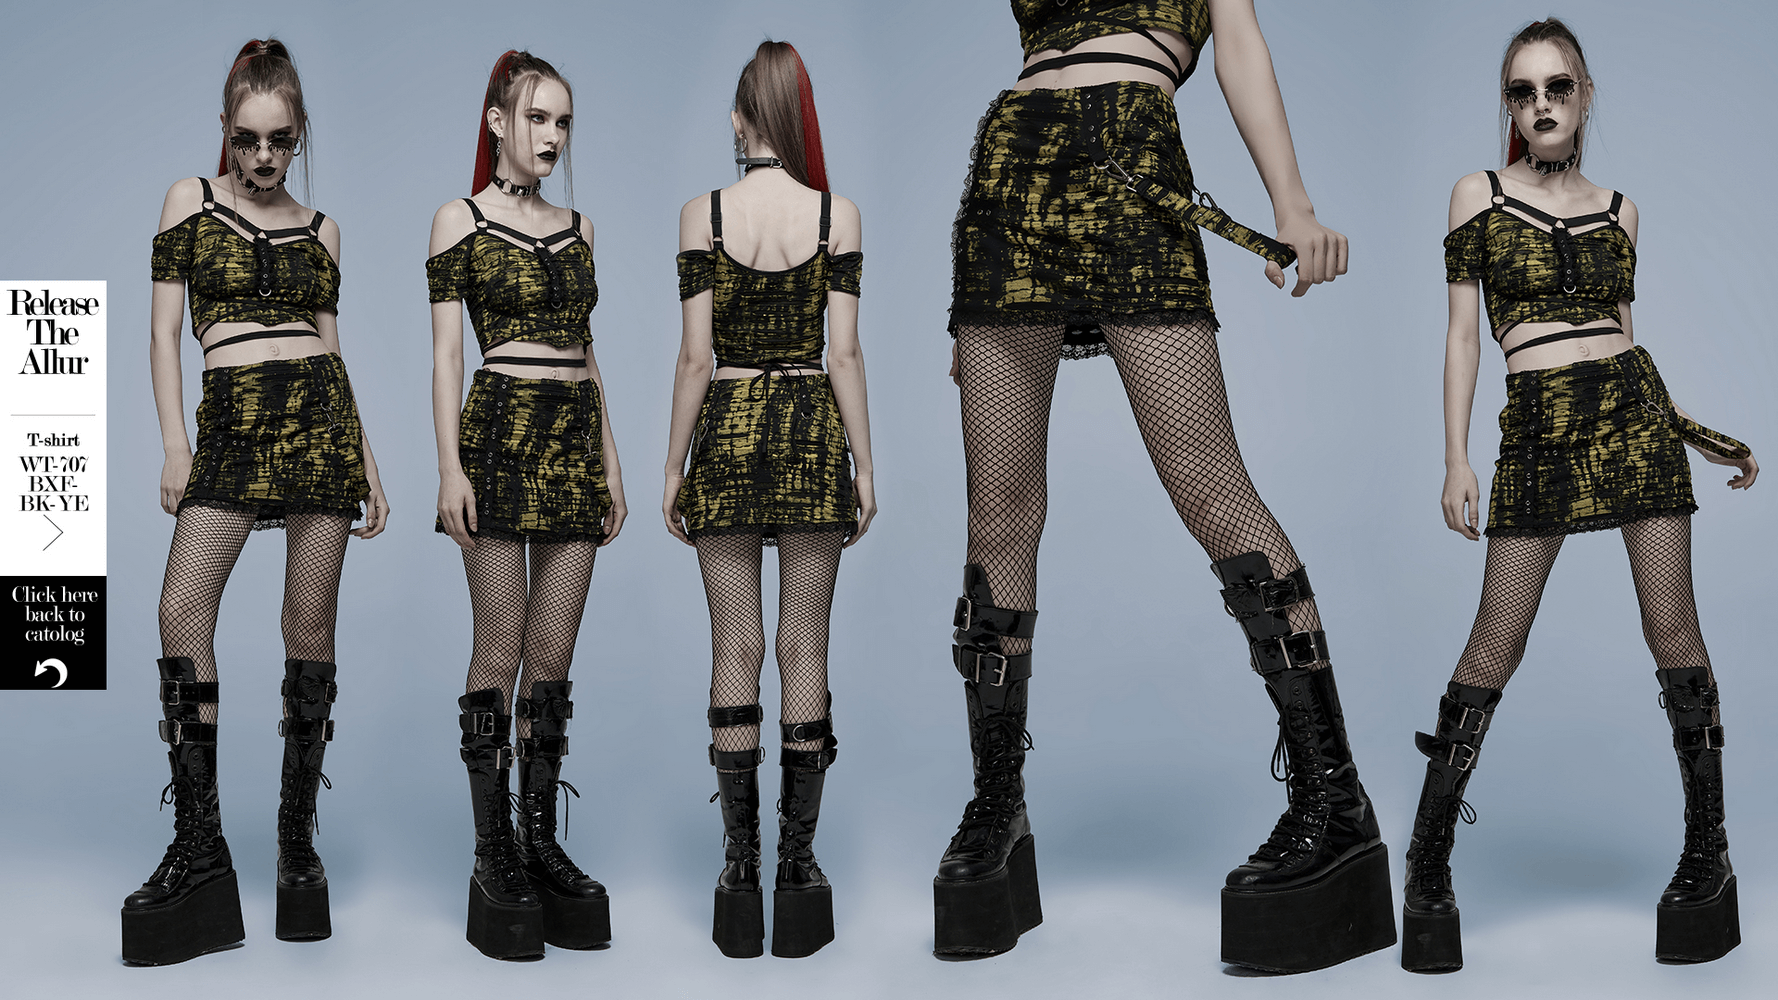 Punk Cross Dark Decadent Broken Hole Knit Mini Skirt - HARD'N'HEAVY